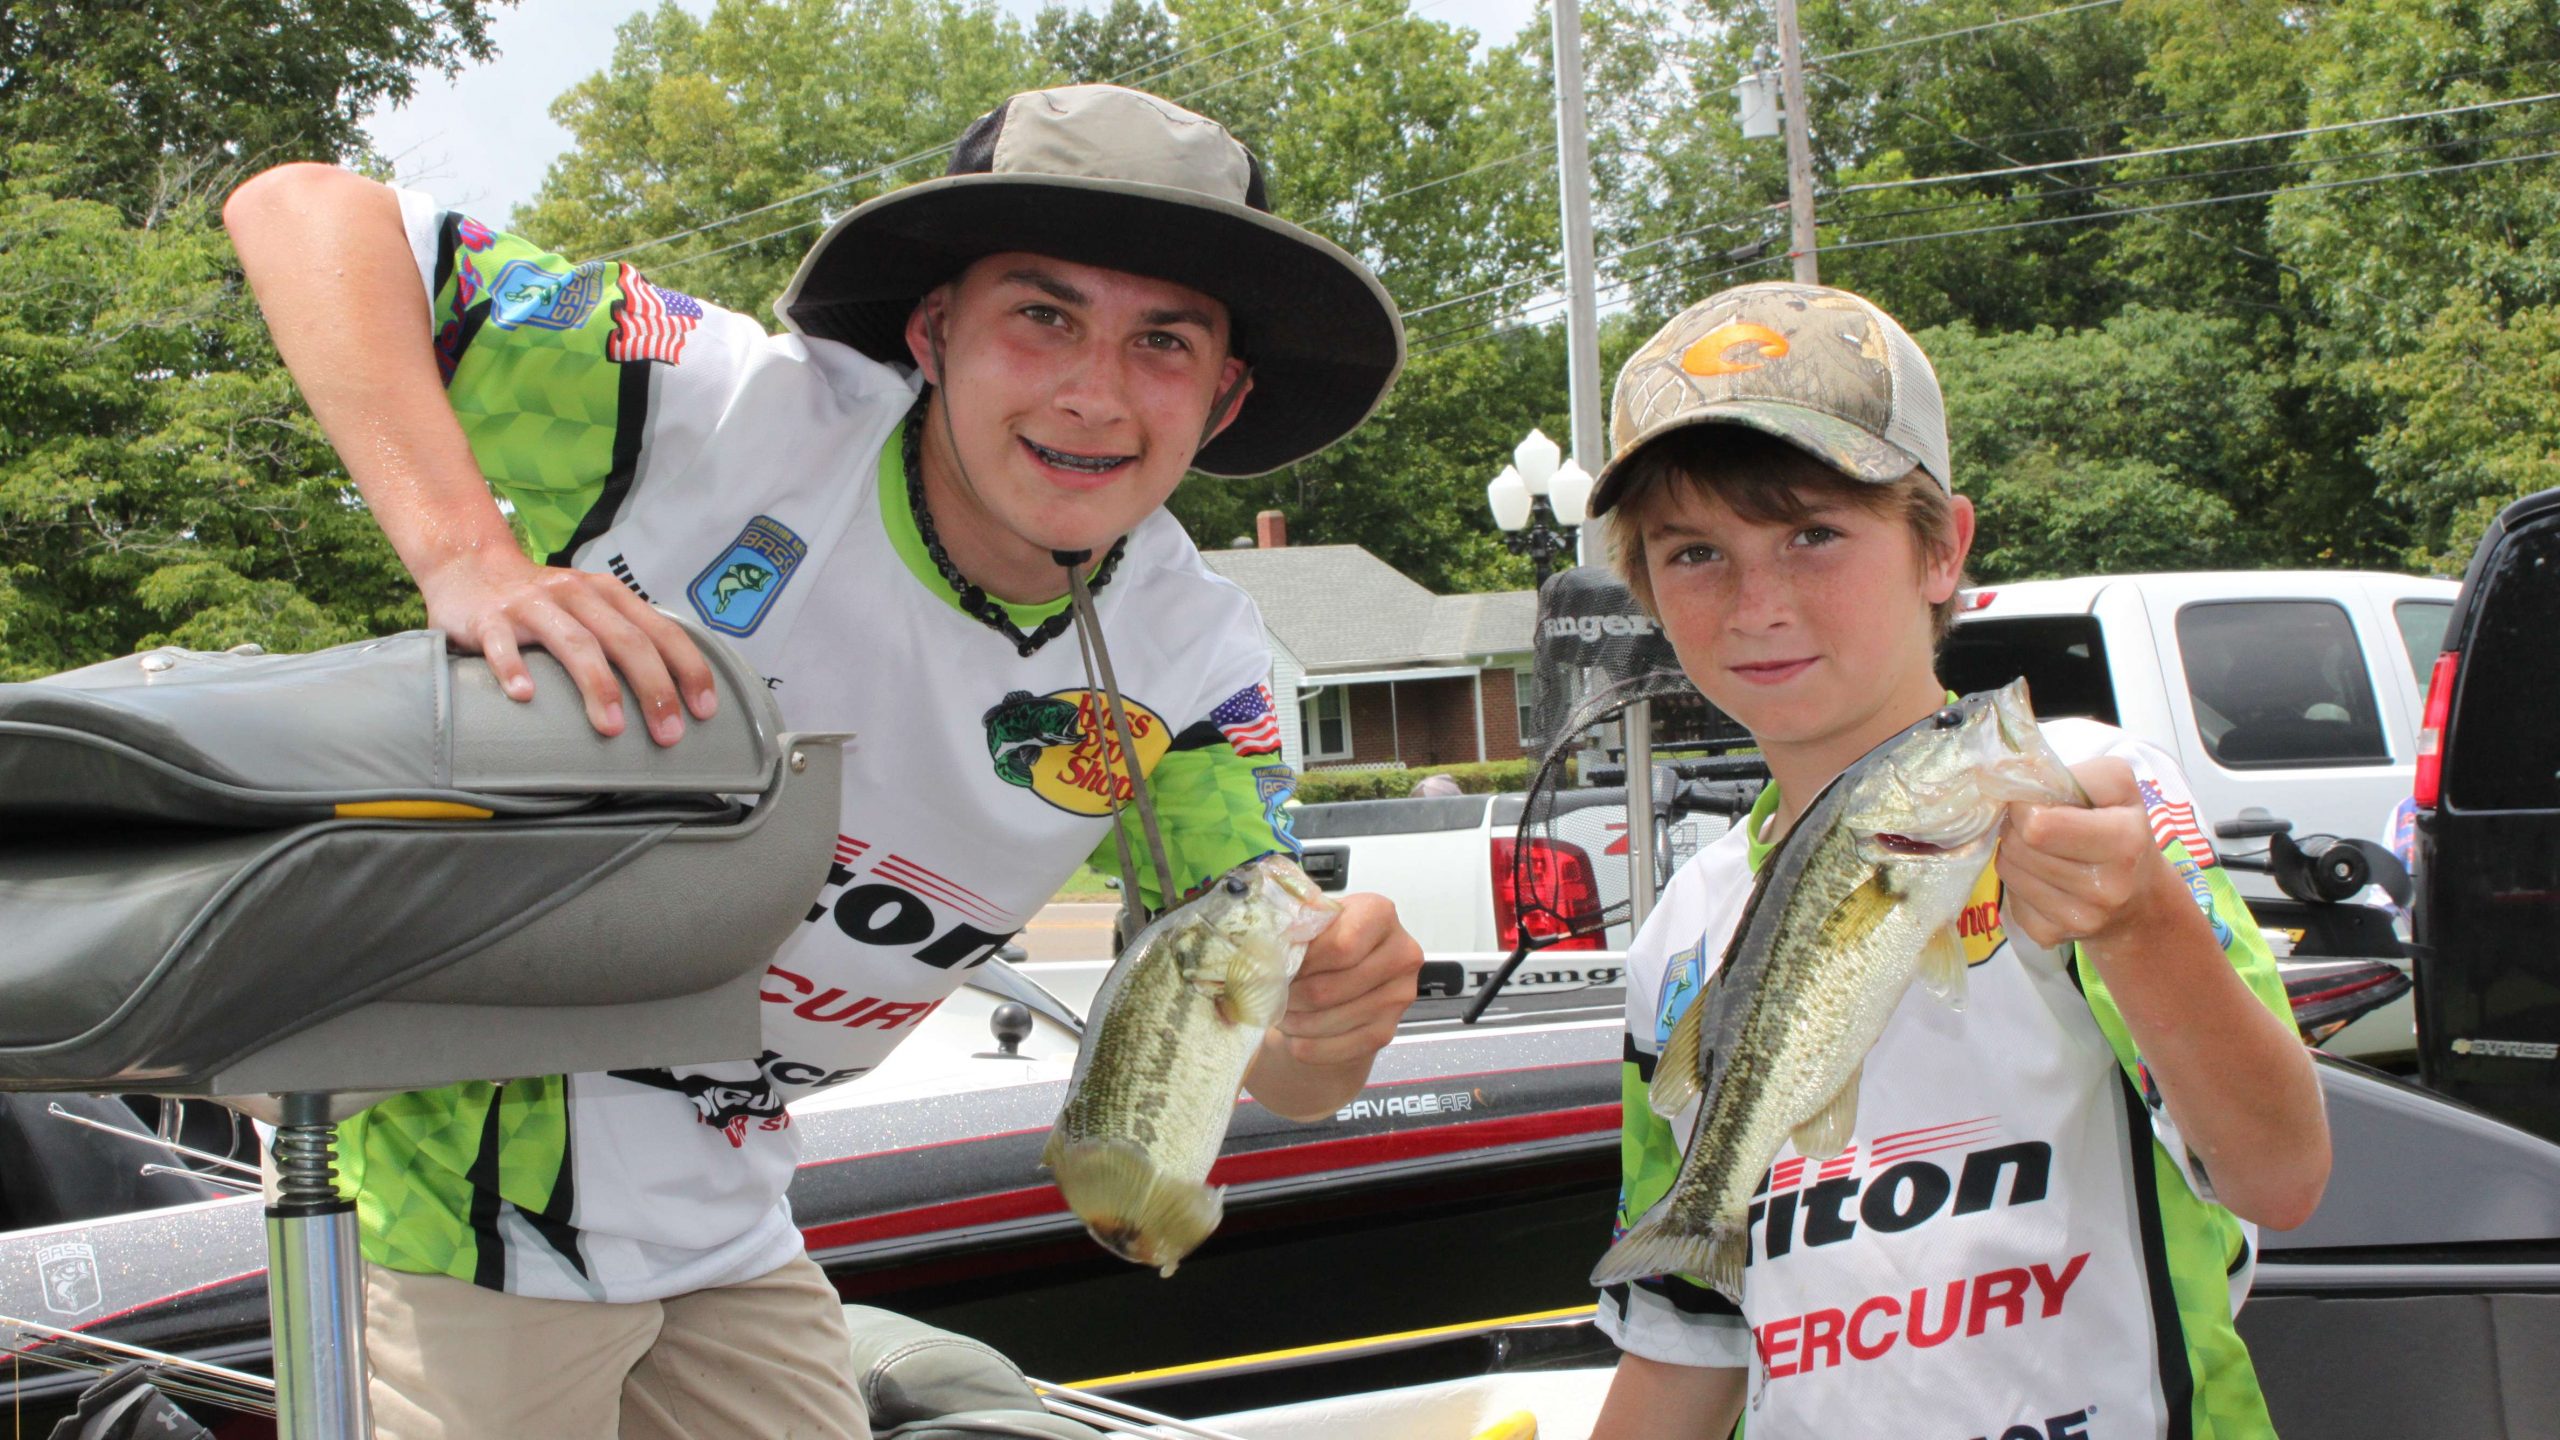 Team North Carolinaâs Hunter White and Bennett Bauer give a sneak peak at some of their catch.